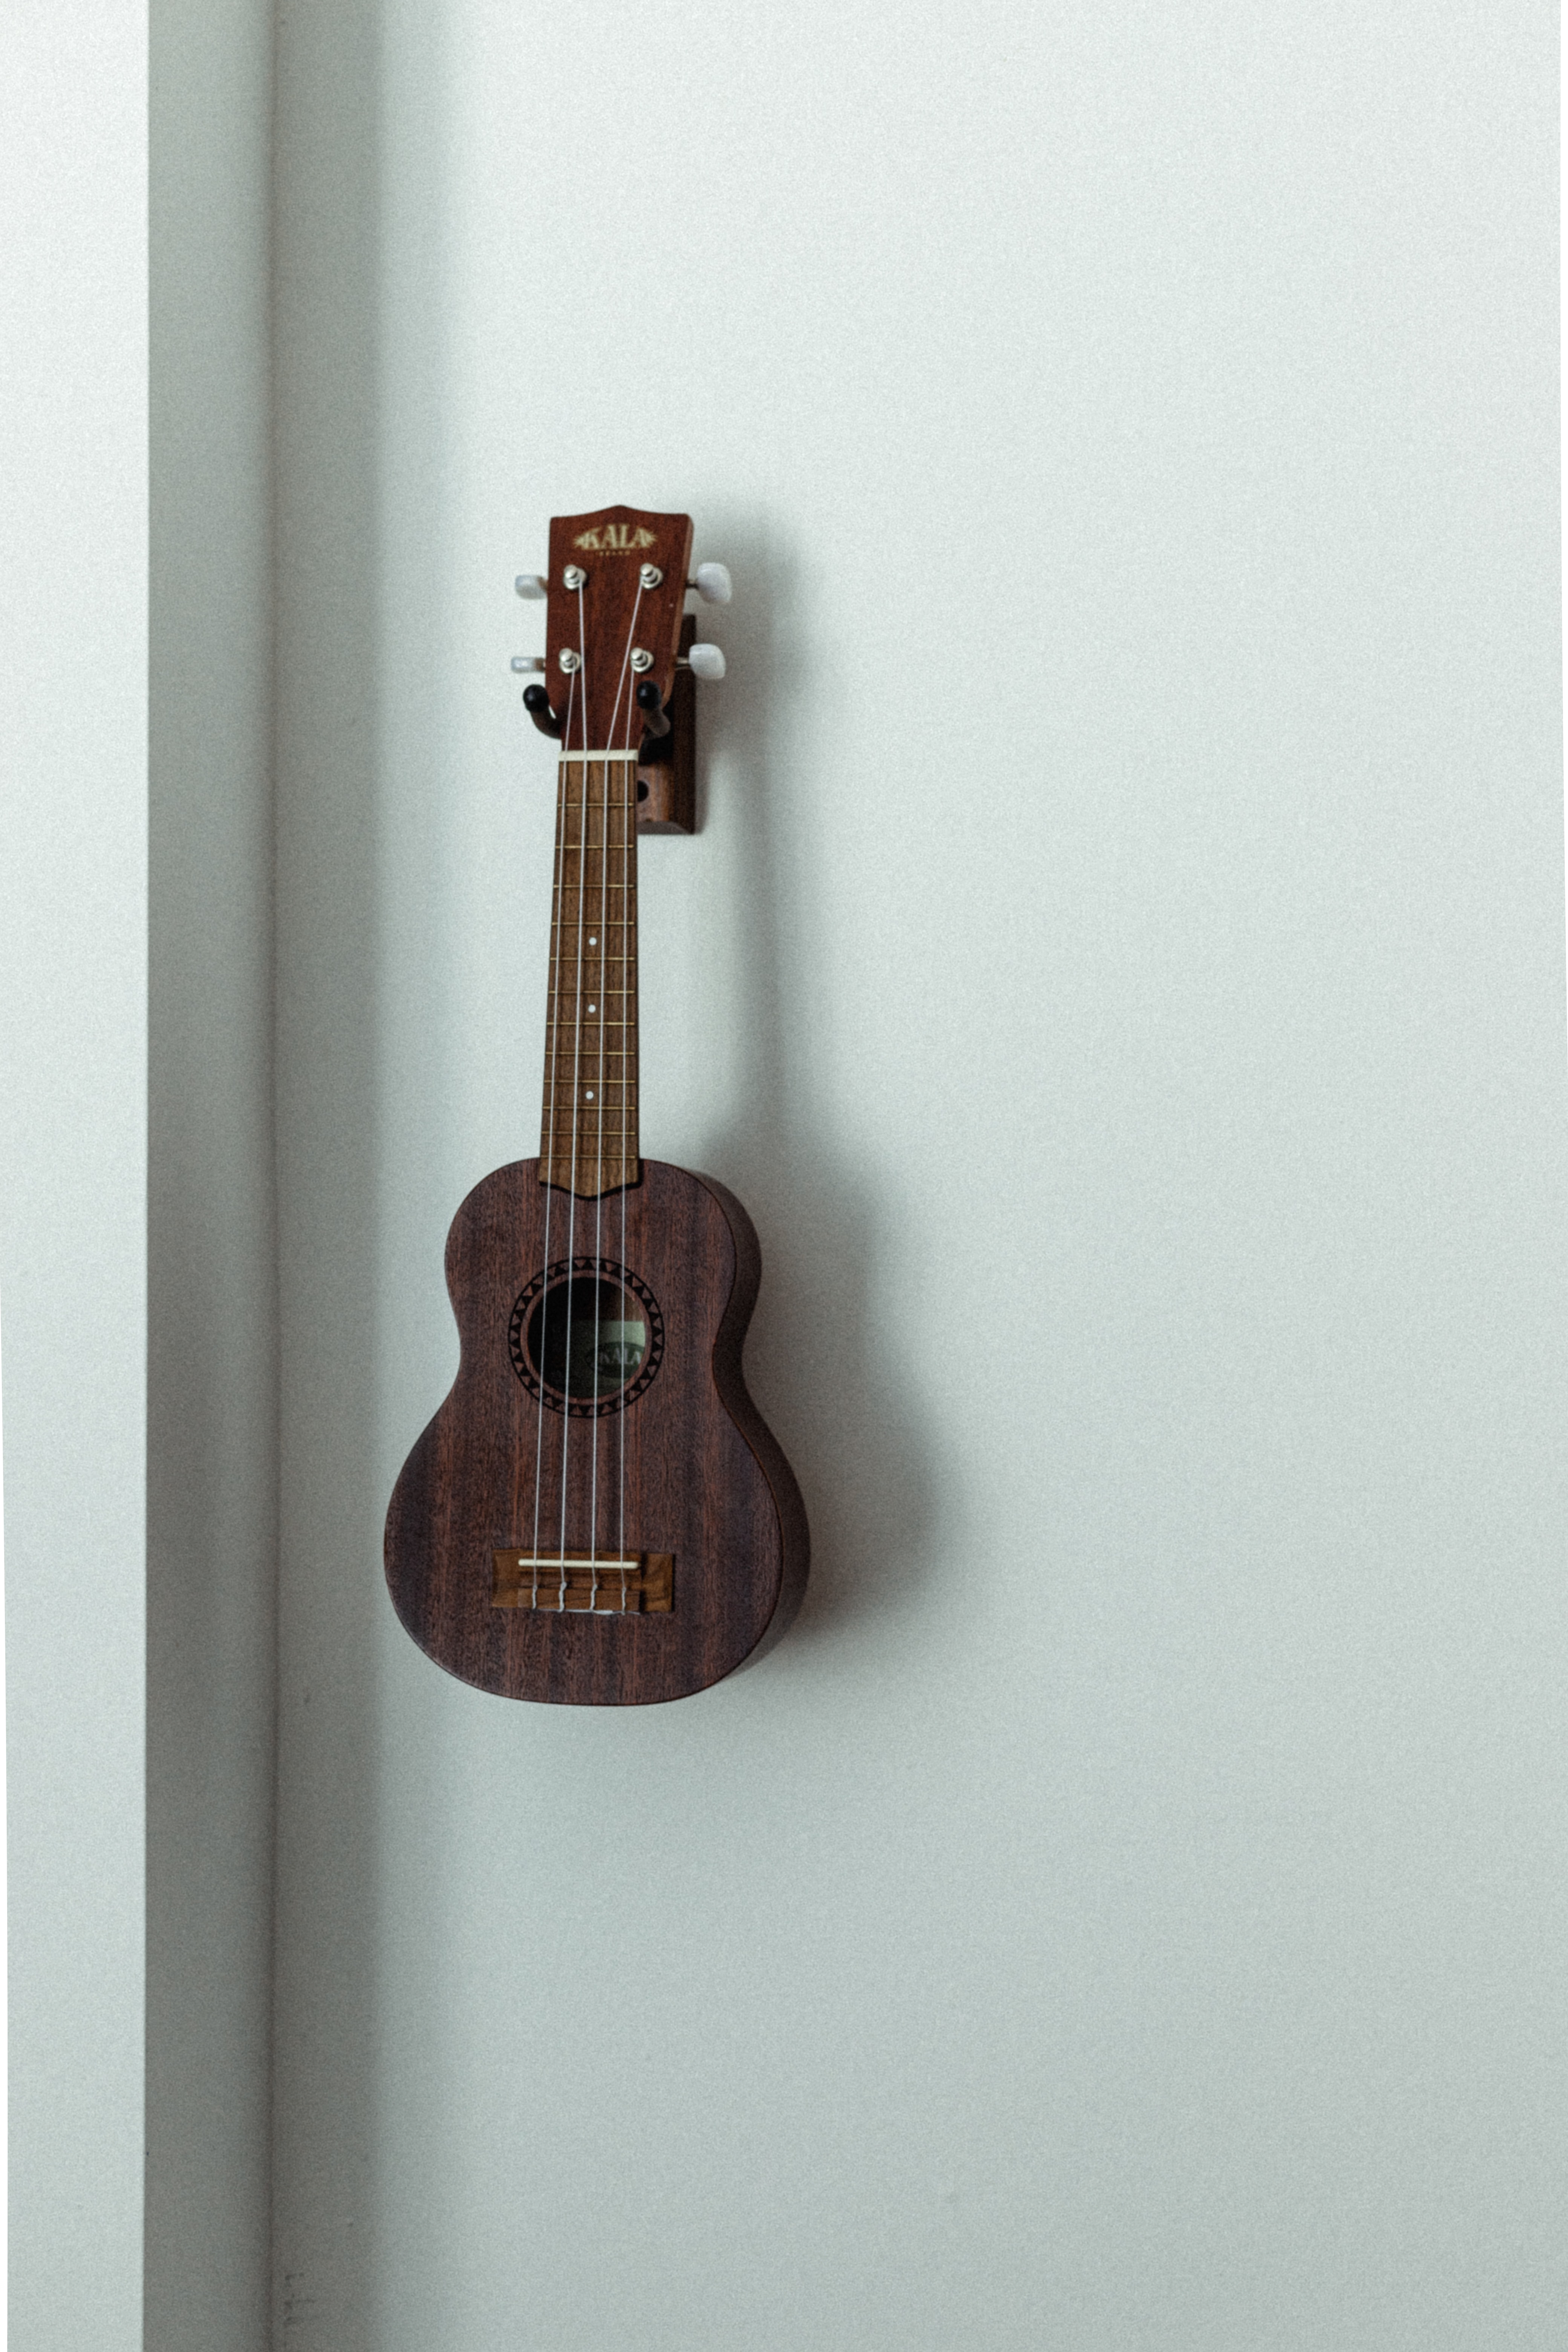 strings, musical instrument, wall, ukulele, music